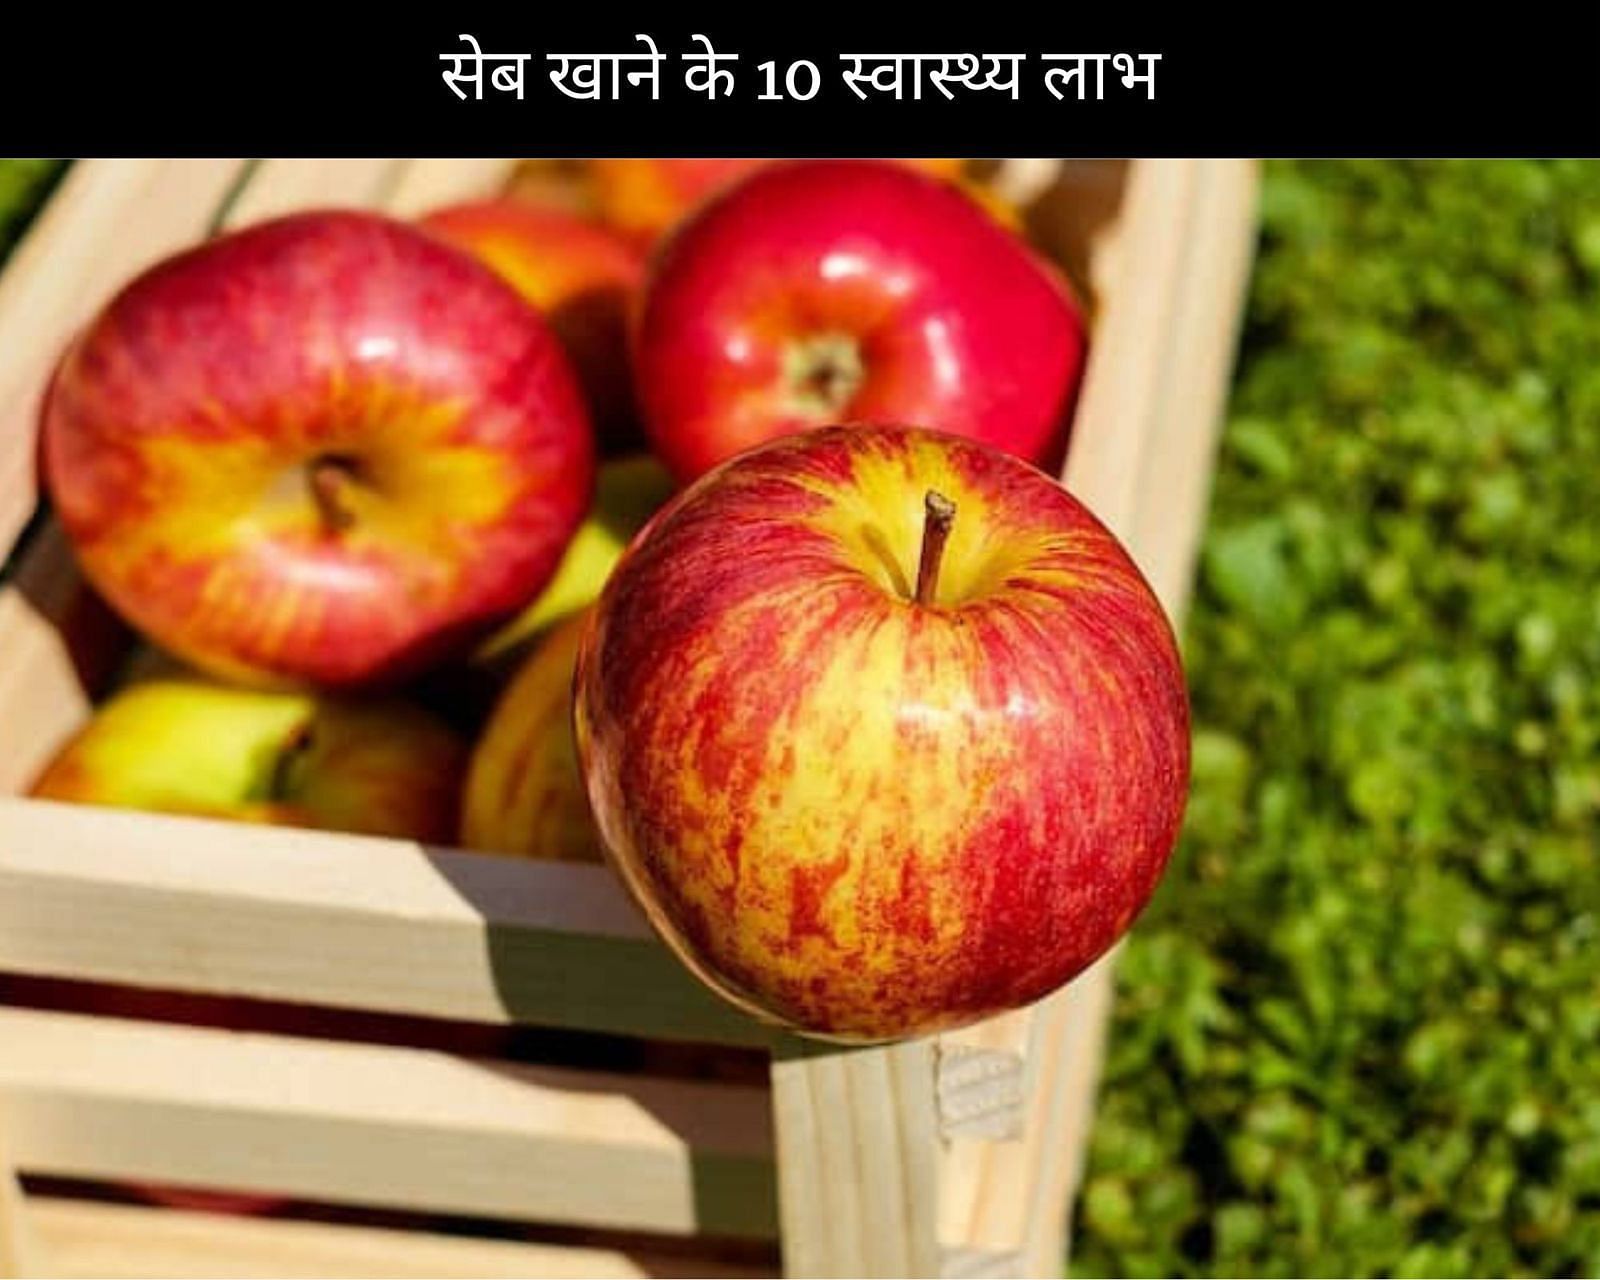 सेब खाने के 10 स्वास्थ्य लाभ (फोटो - sportskeedaहिन्दी)